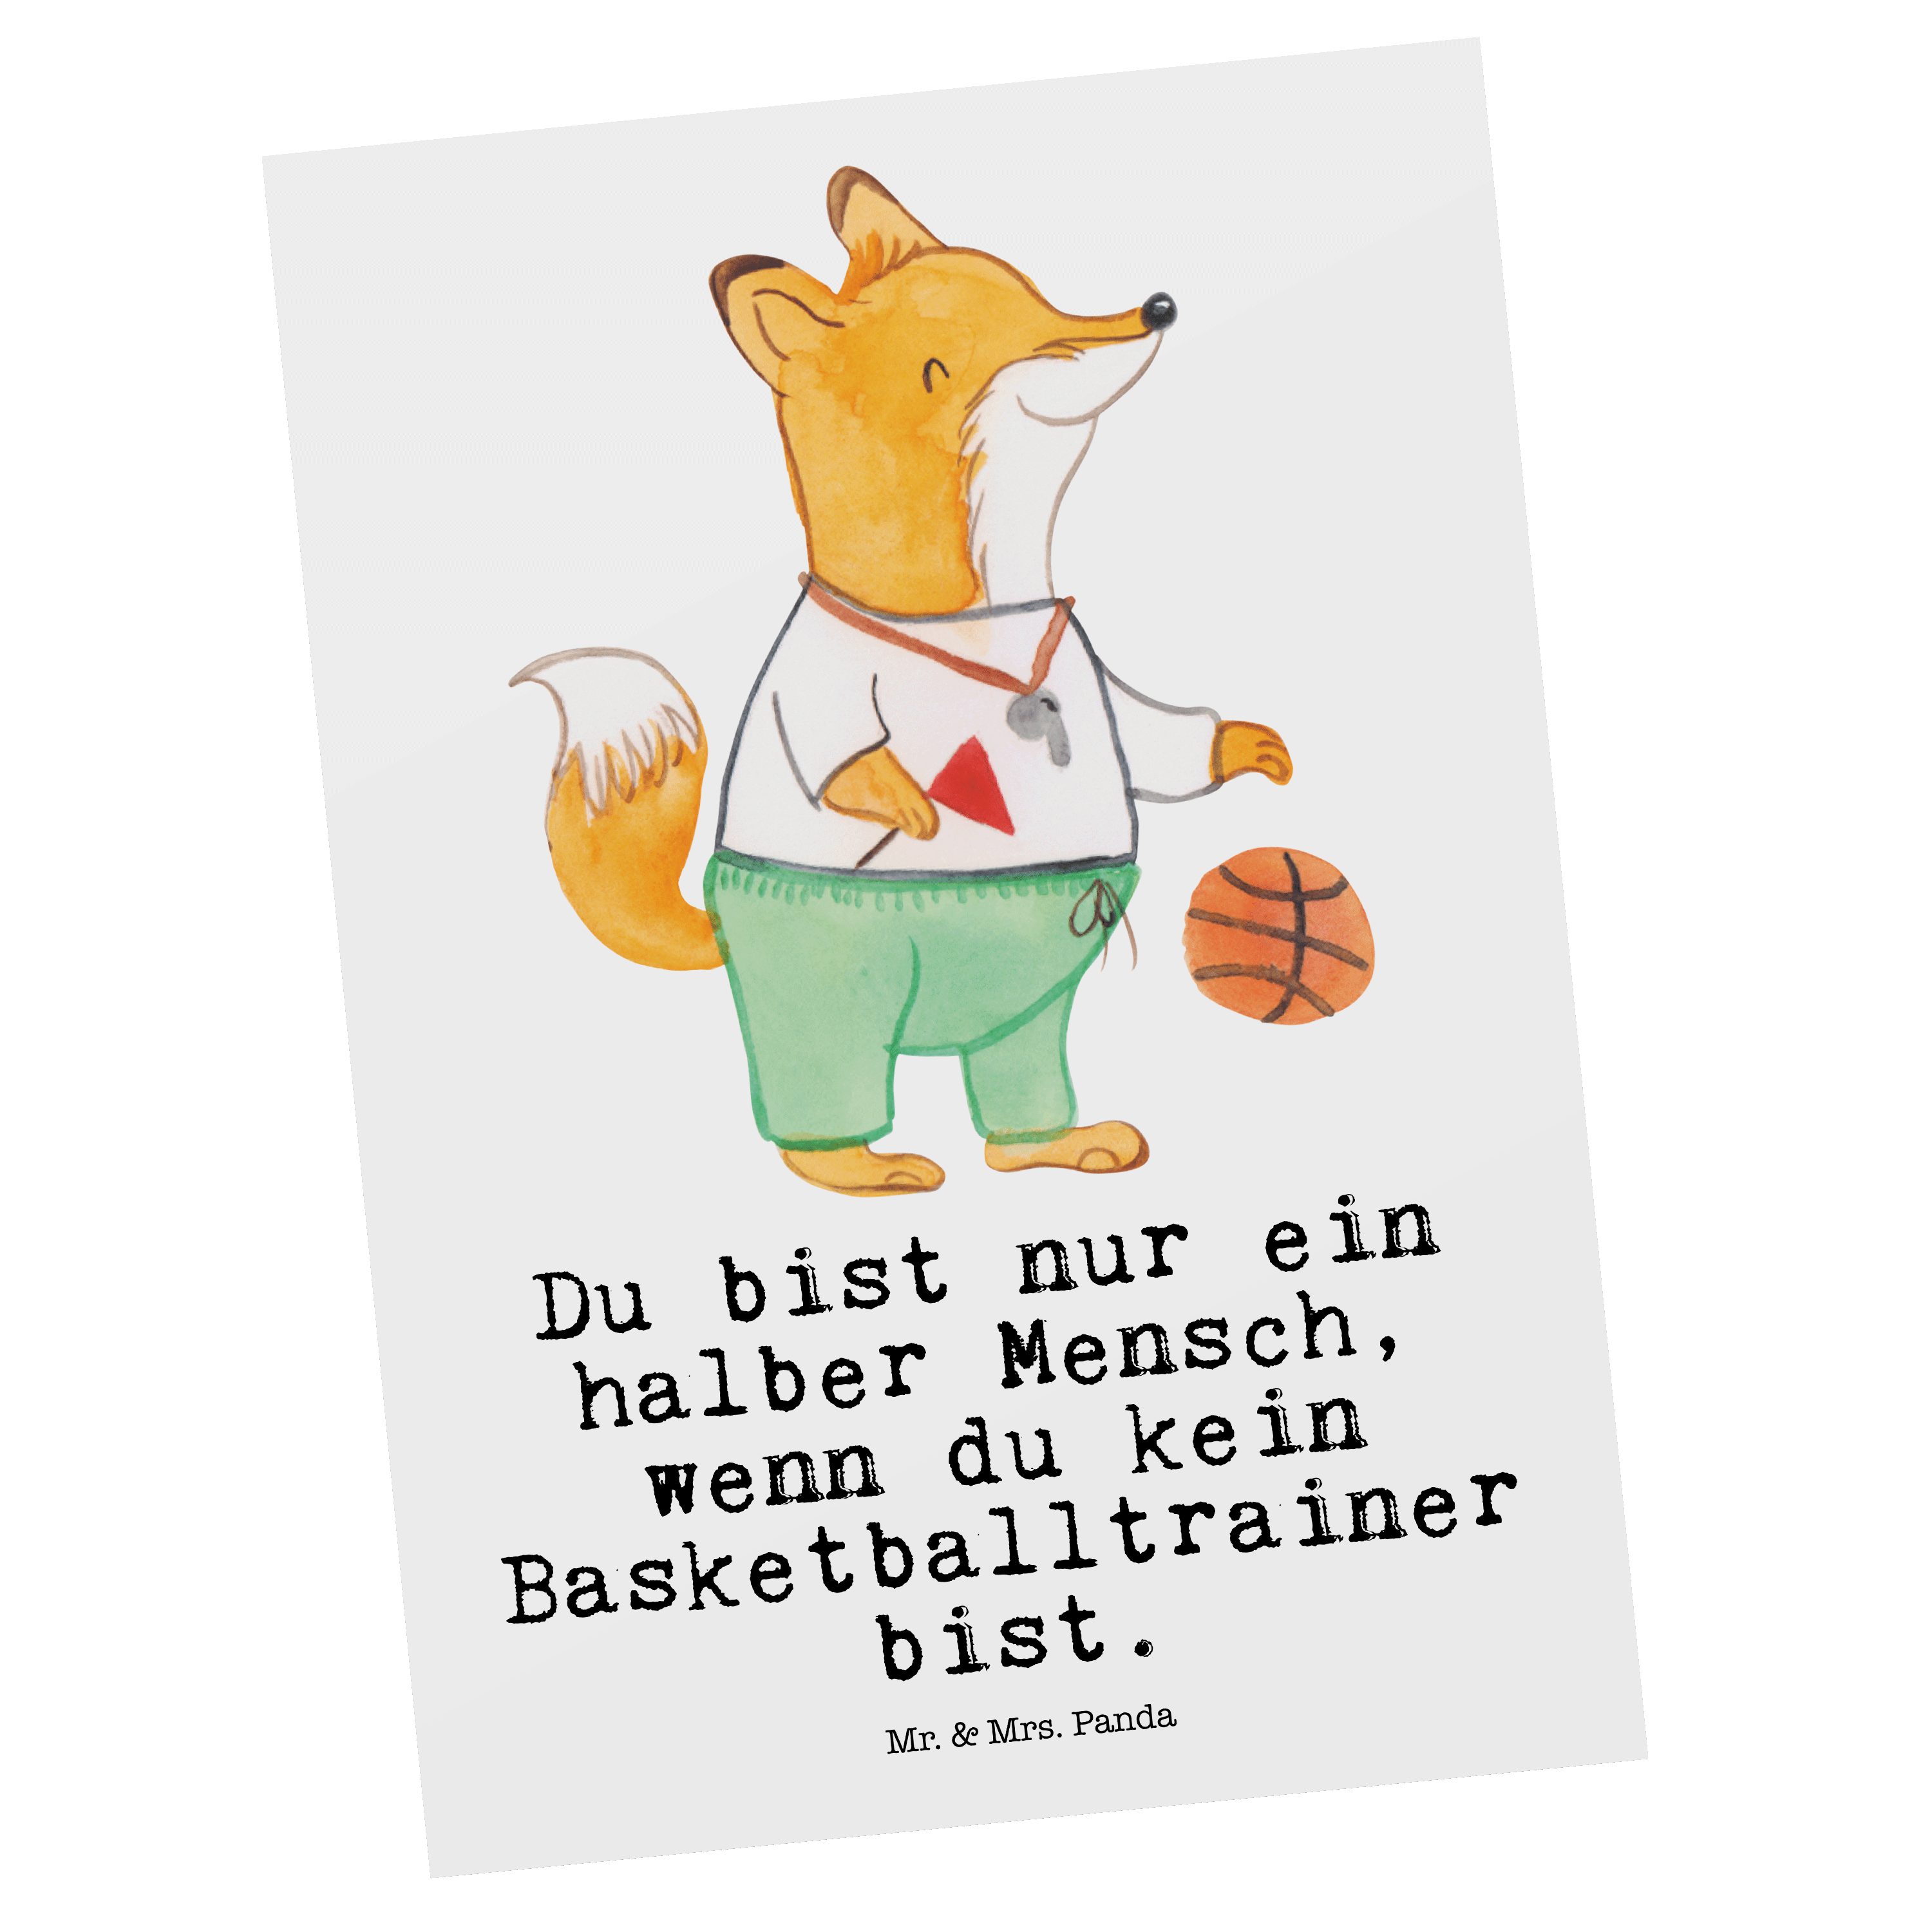 Mr. & Mrs. Panda Weiß Postkarte Da Basketballer, Basketballtrainer - mit Firma, - Geschenk, Herz